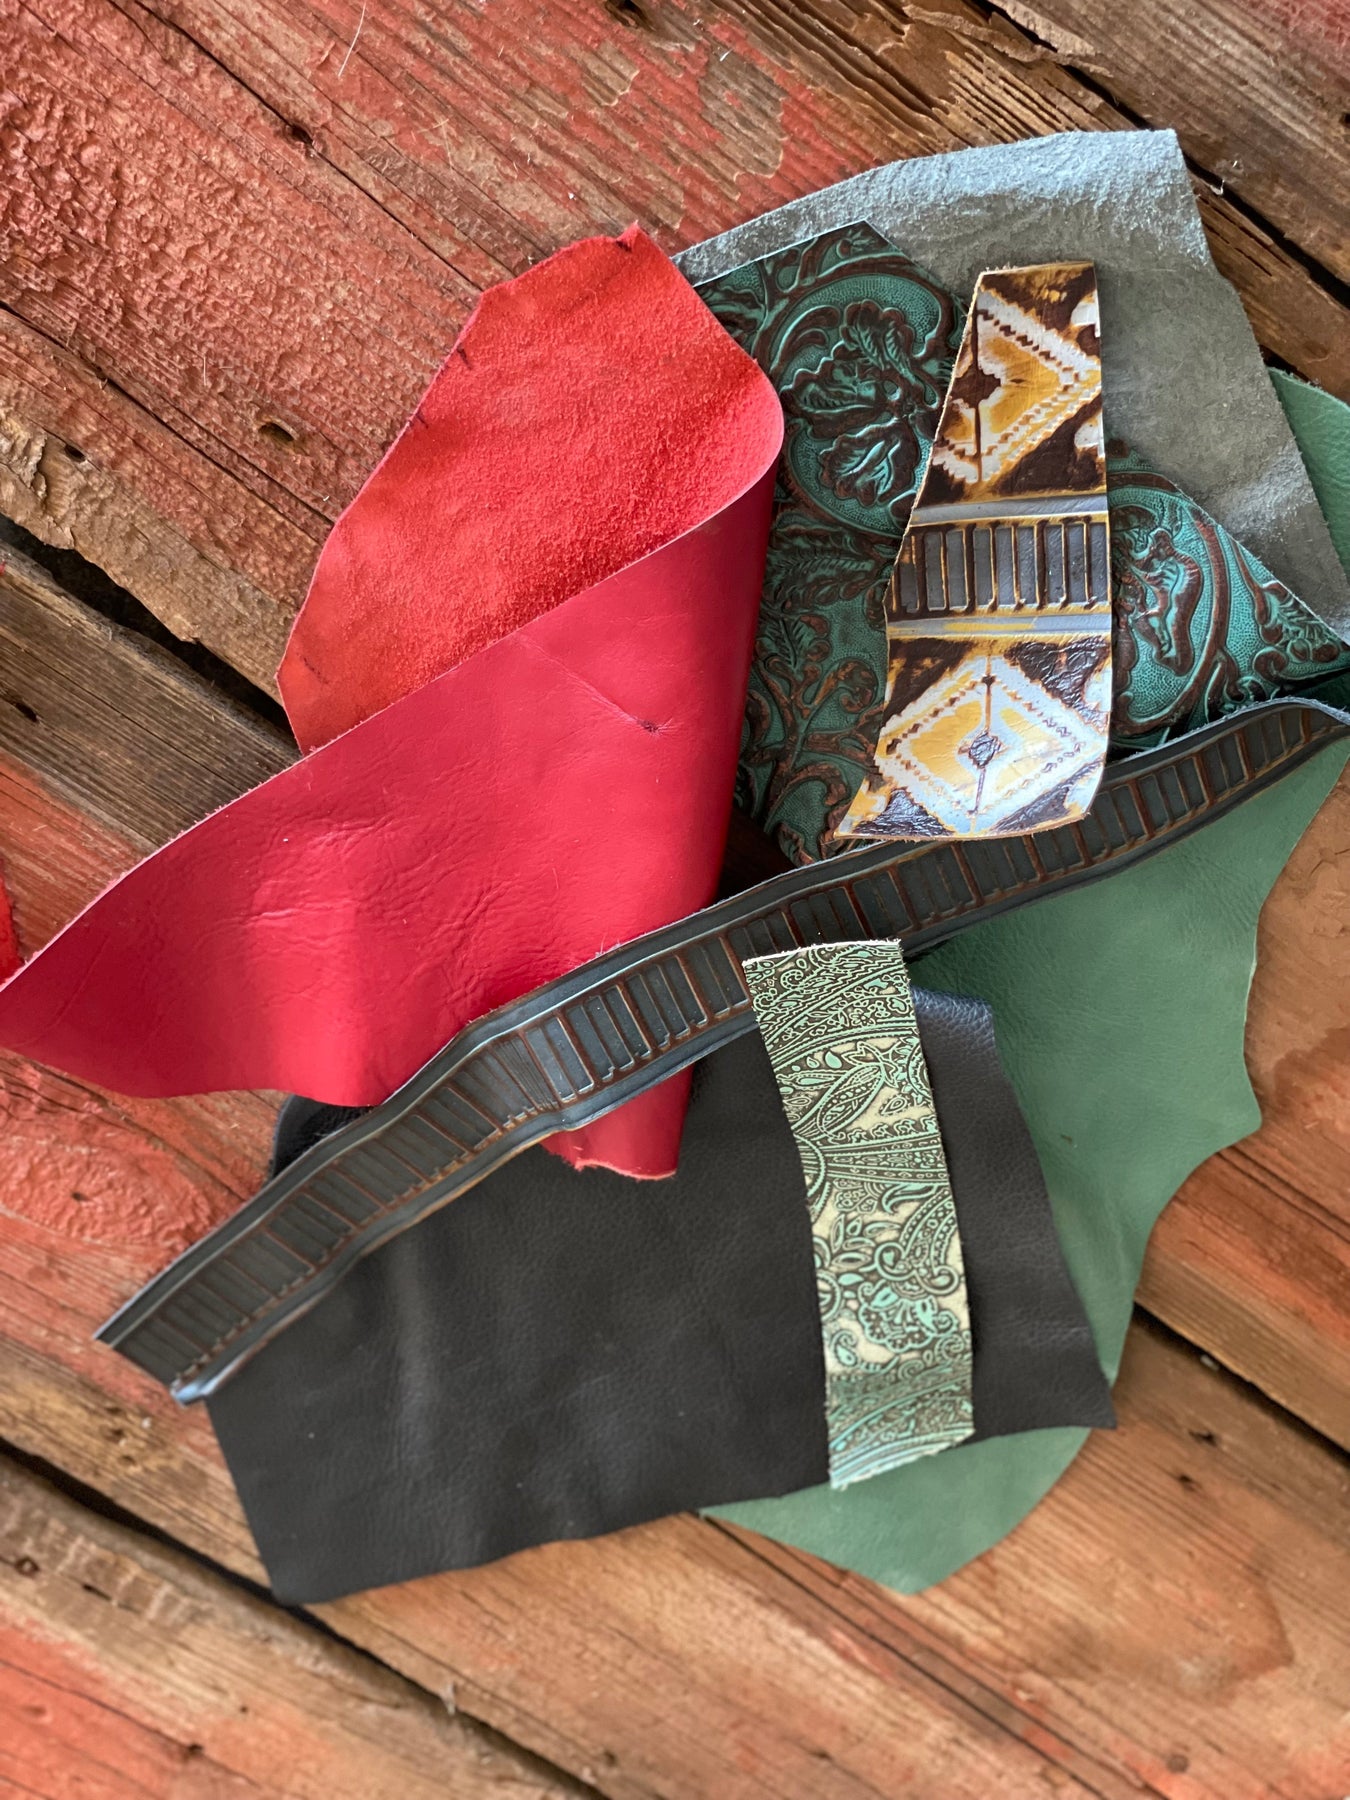 Buy Embossed Leather Scraps from Dancing Cactus Designs